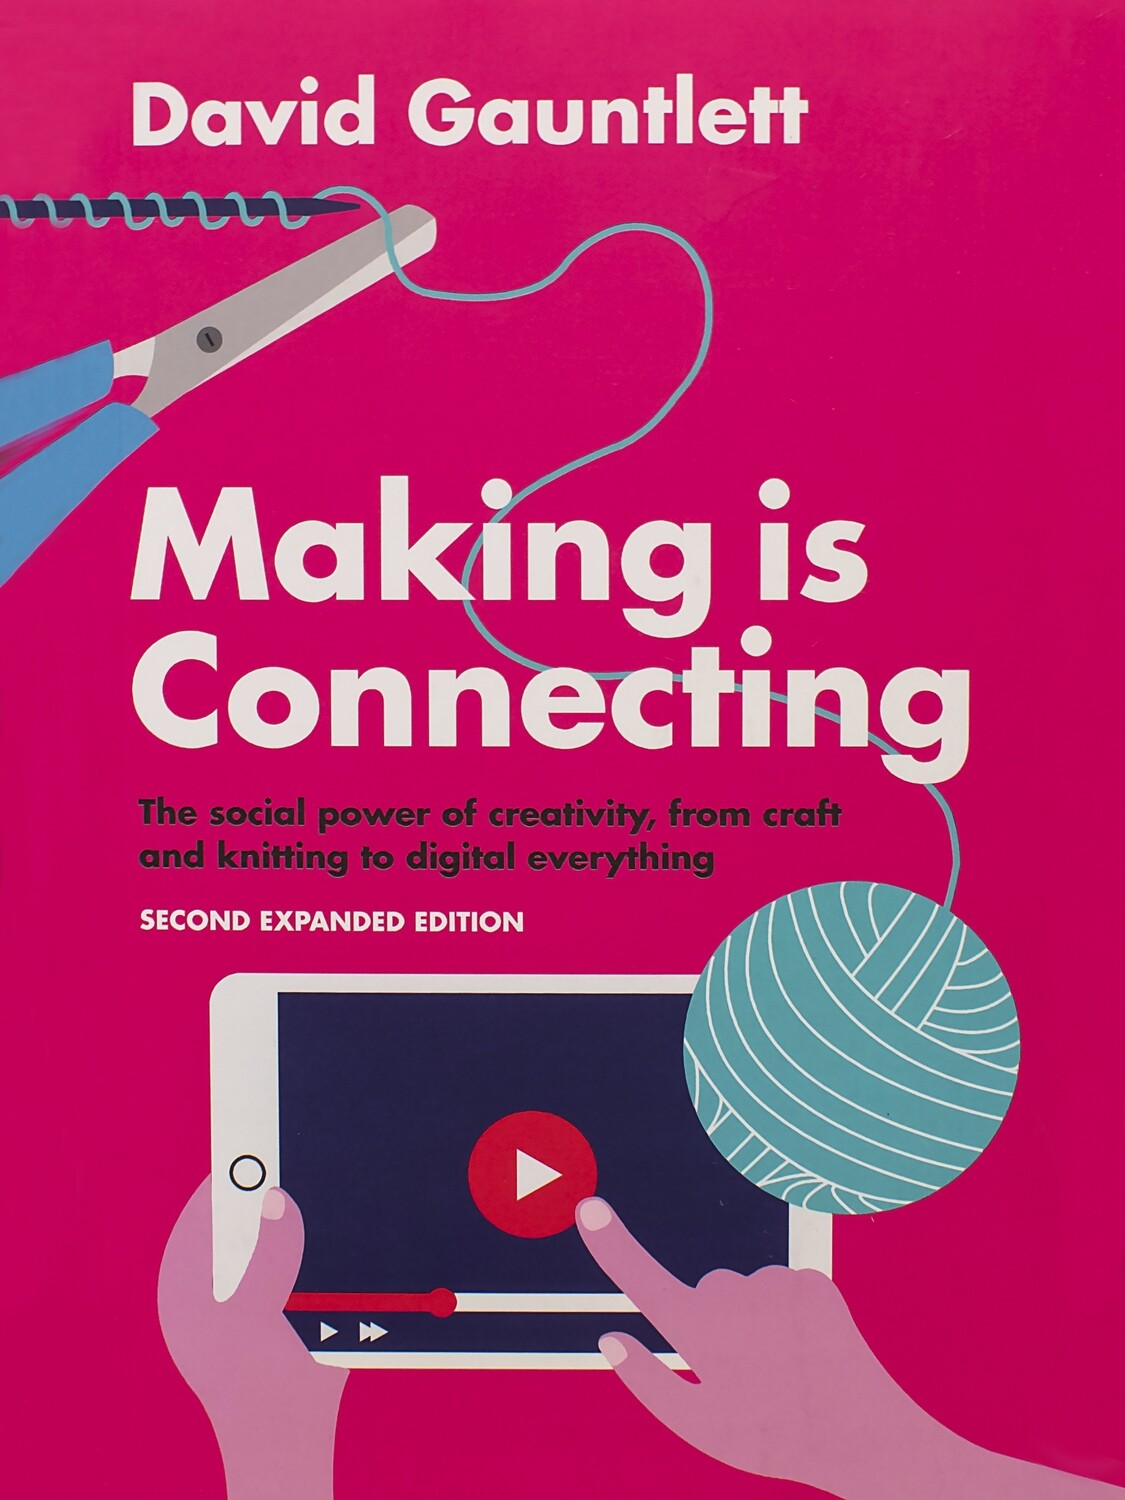 David Gauntlett: Making is Connecting